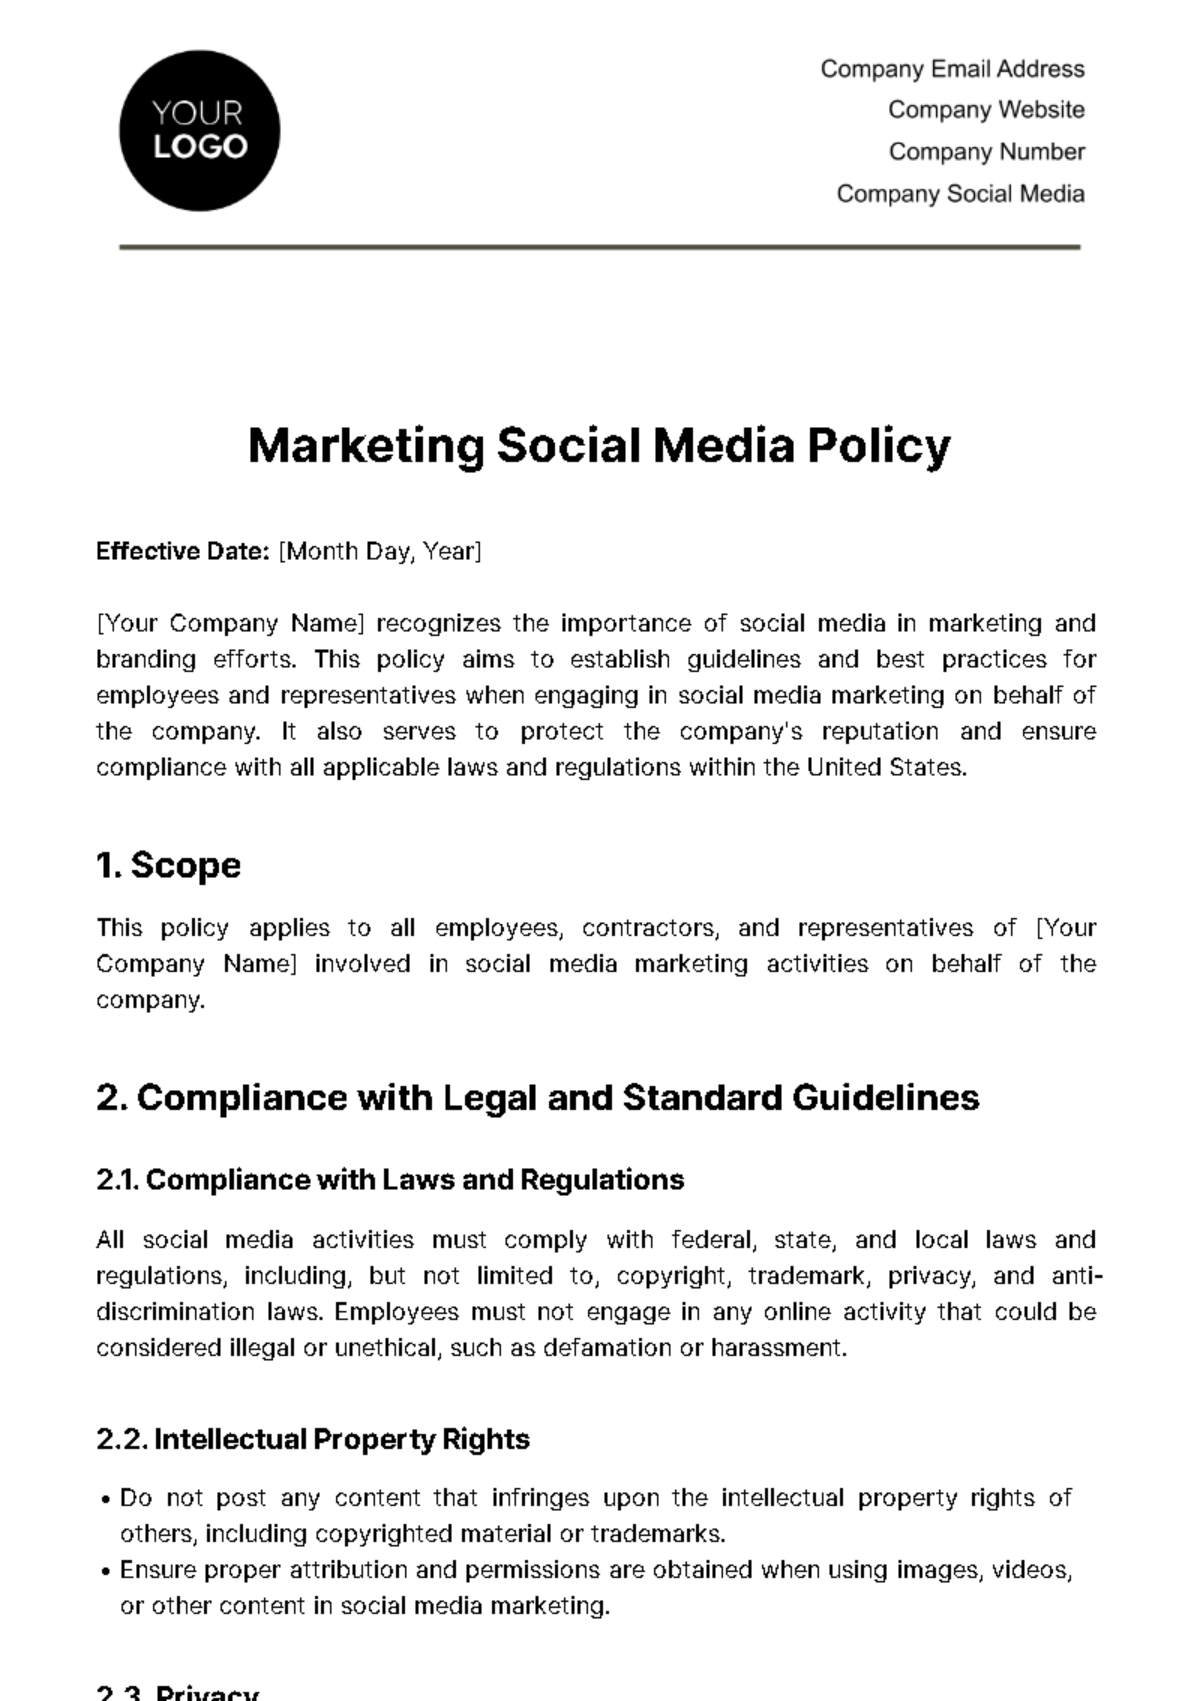 Marketing Social Media Policy Template